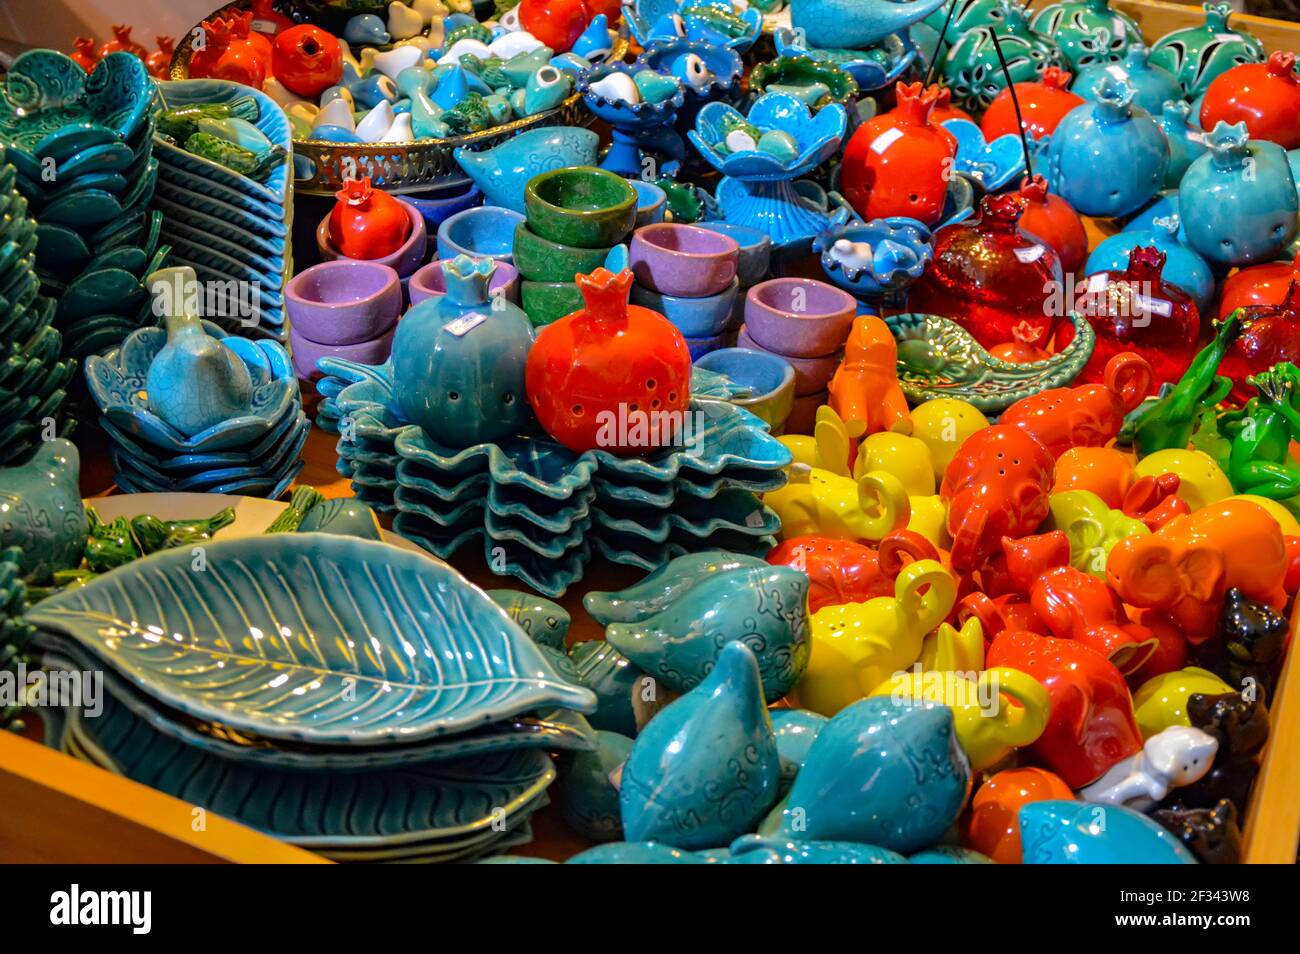 Tehran, Iran - November 23, 2015: Colorful handmade ceramics souvenirs sold at the Tehran Bazaar in Iran Stock Photo